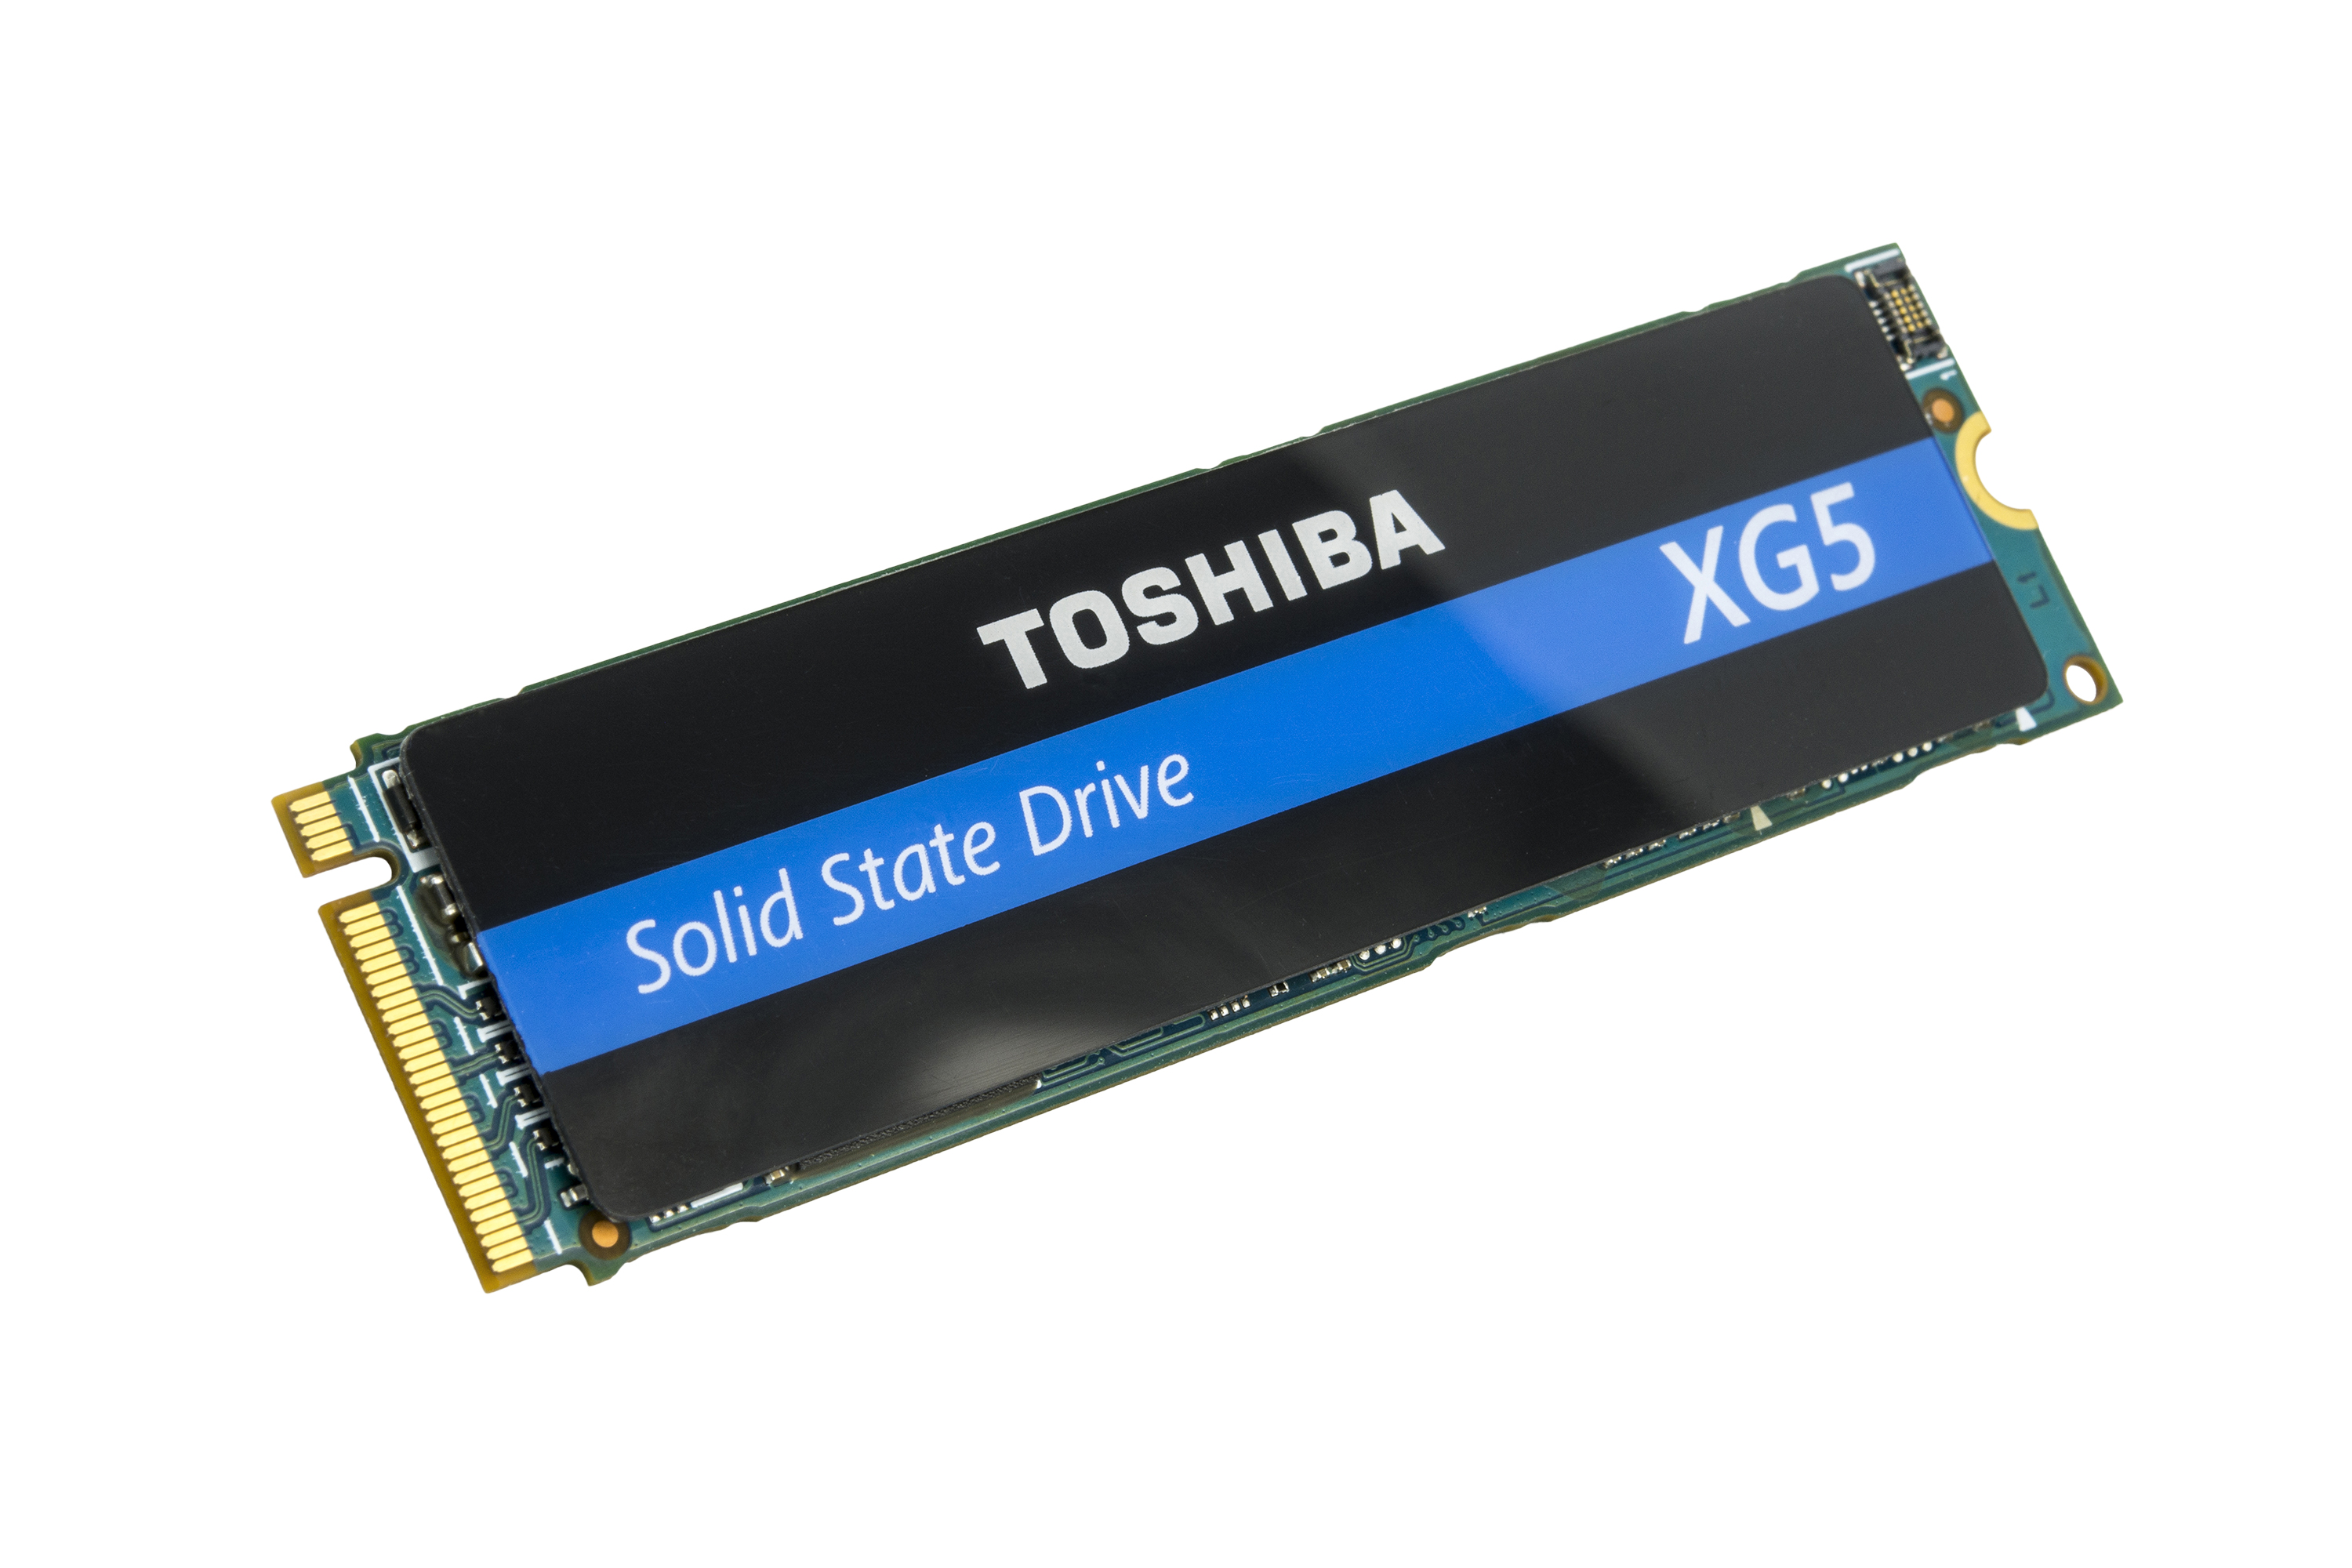 Toshiba XG5